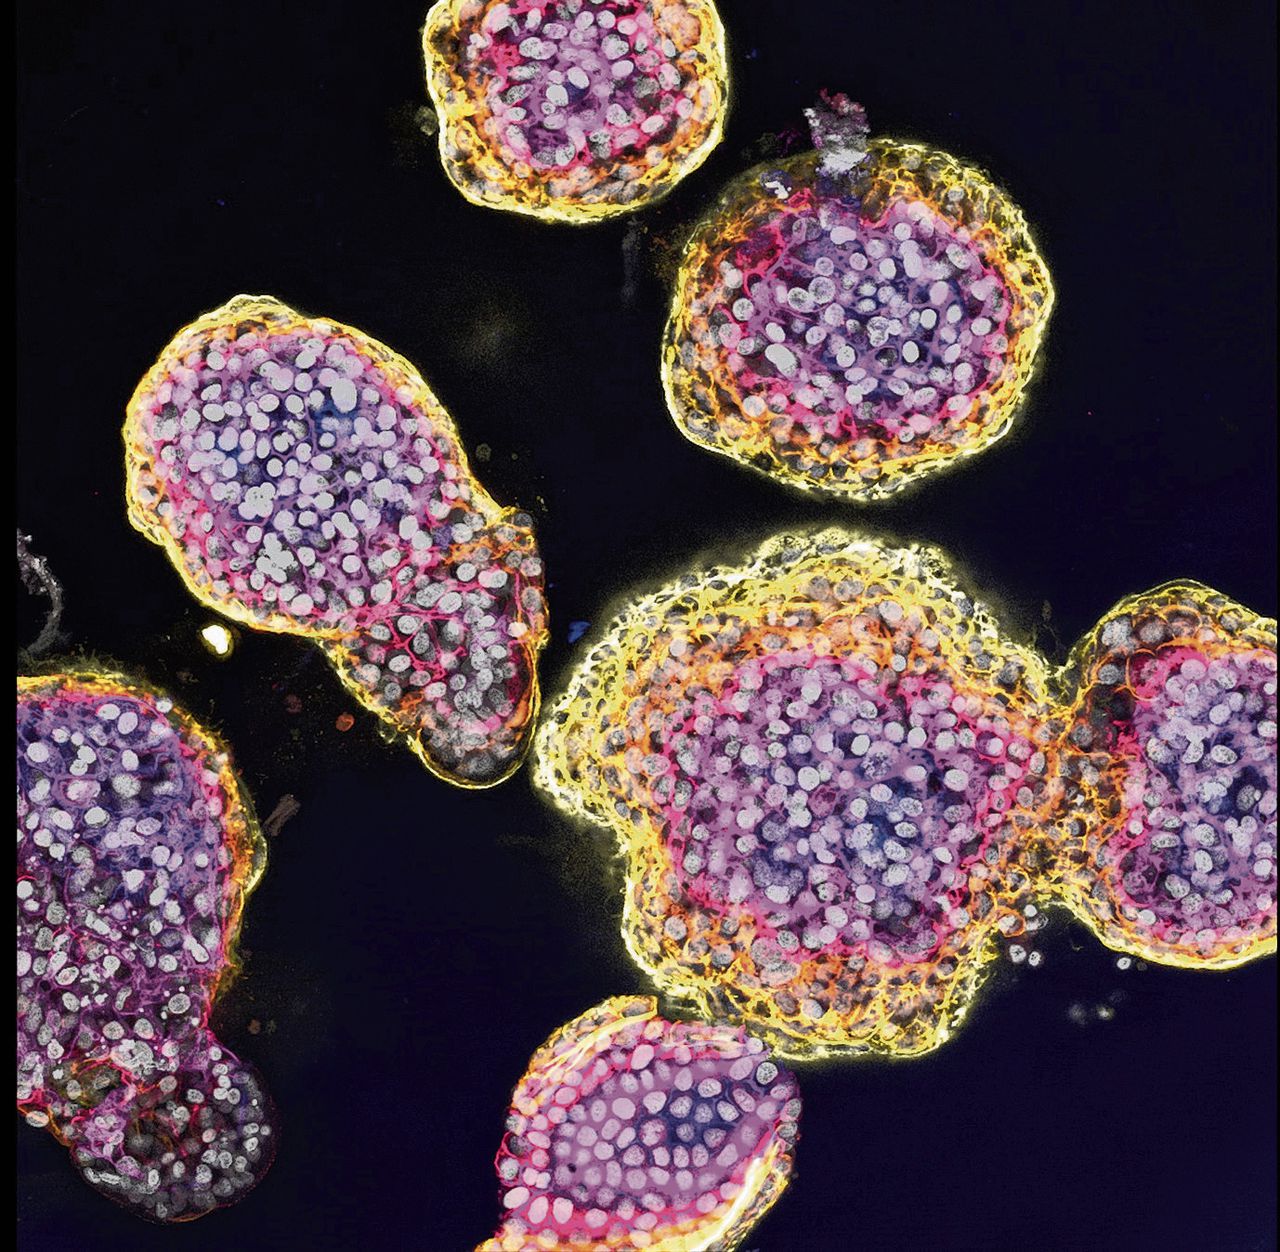 Tumorgroei in menselijke minilevers 